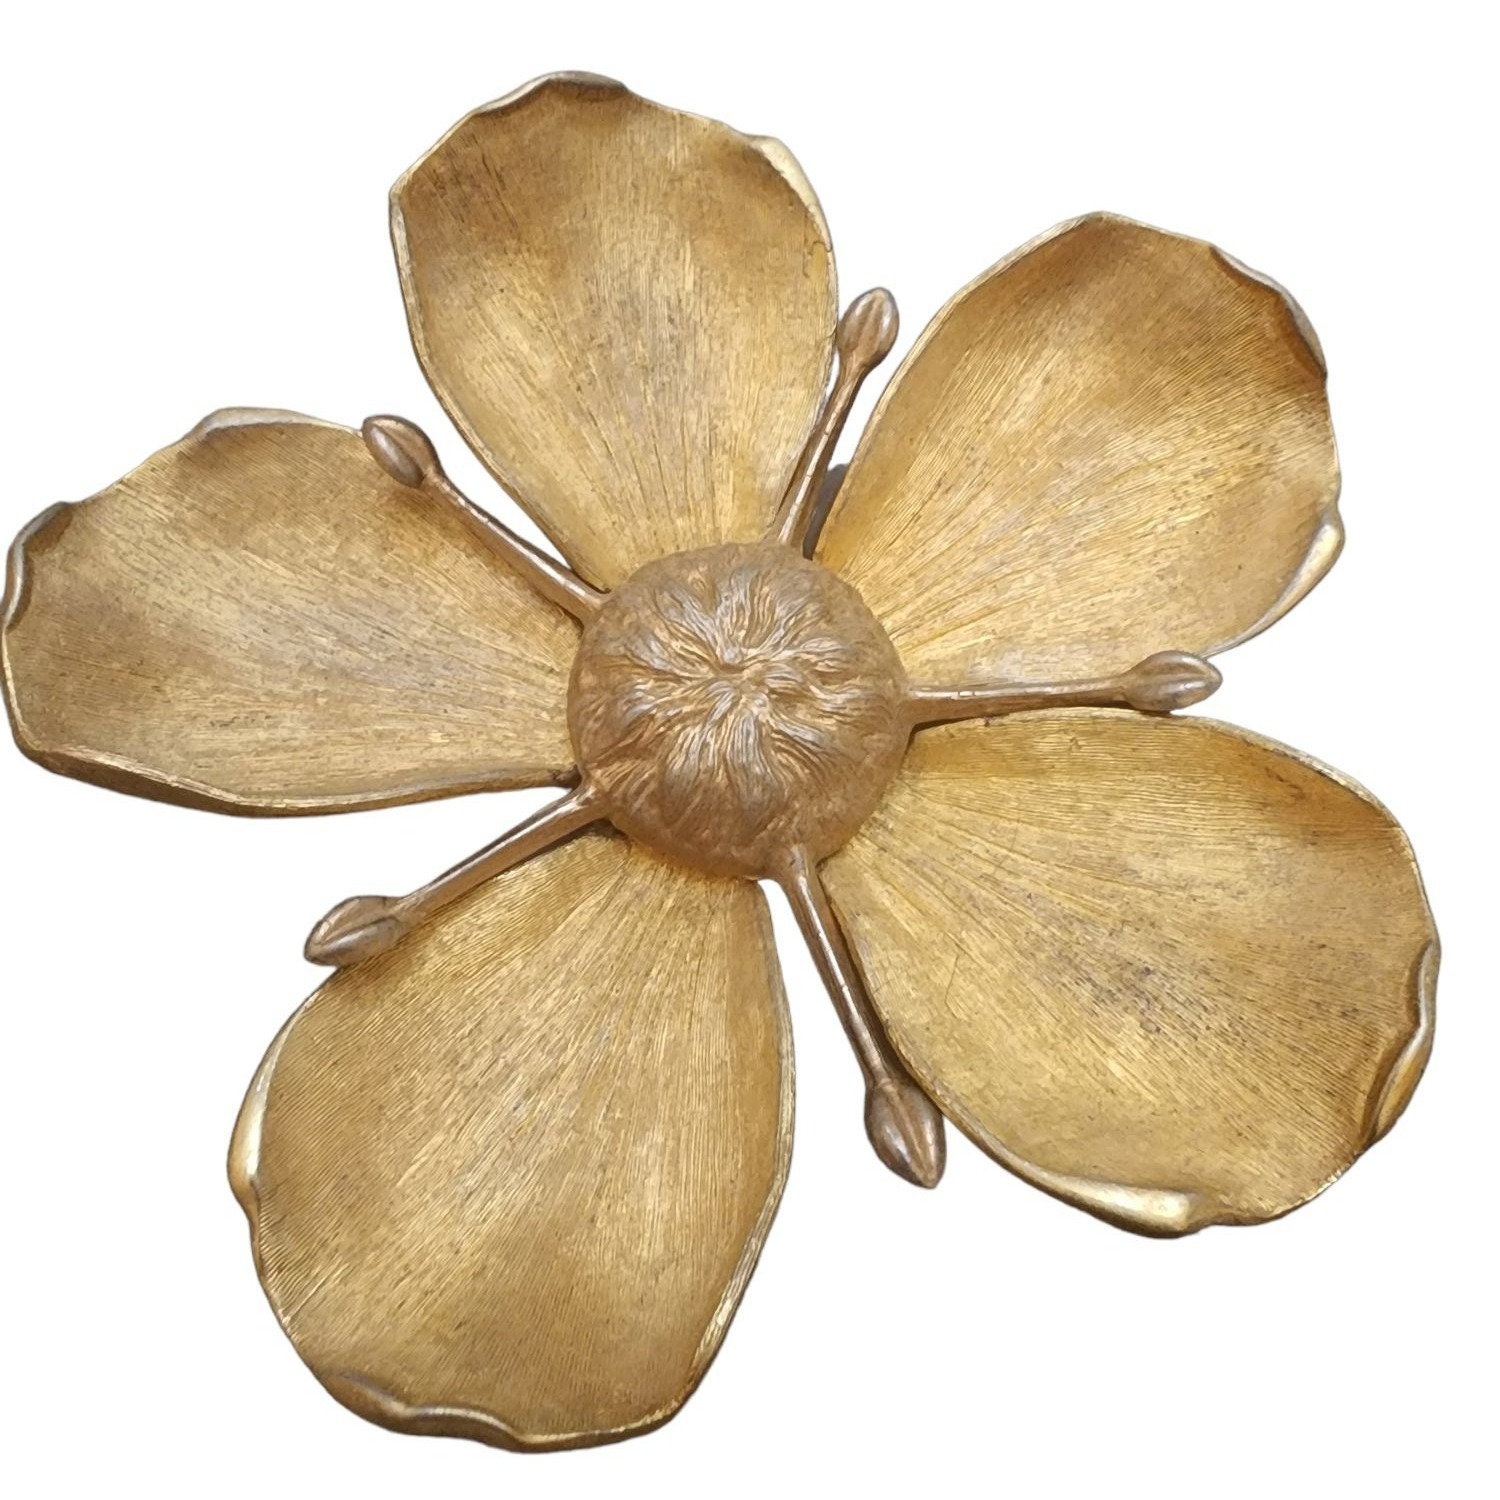 CHUM BUCKET” RECTANGULAR 2-STICK ASHTRAY Margaritaville – Lotus